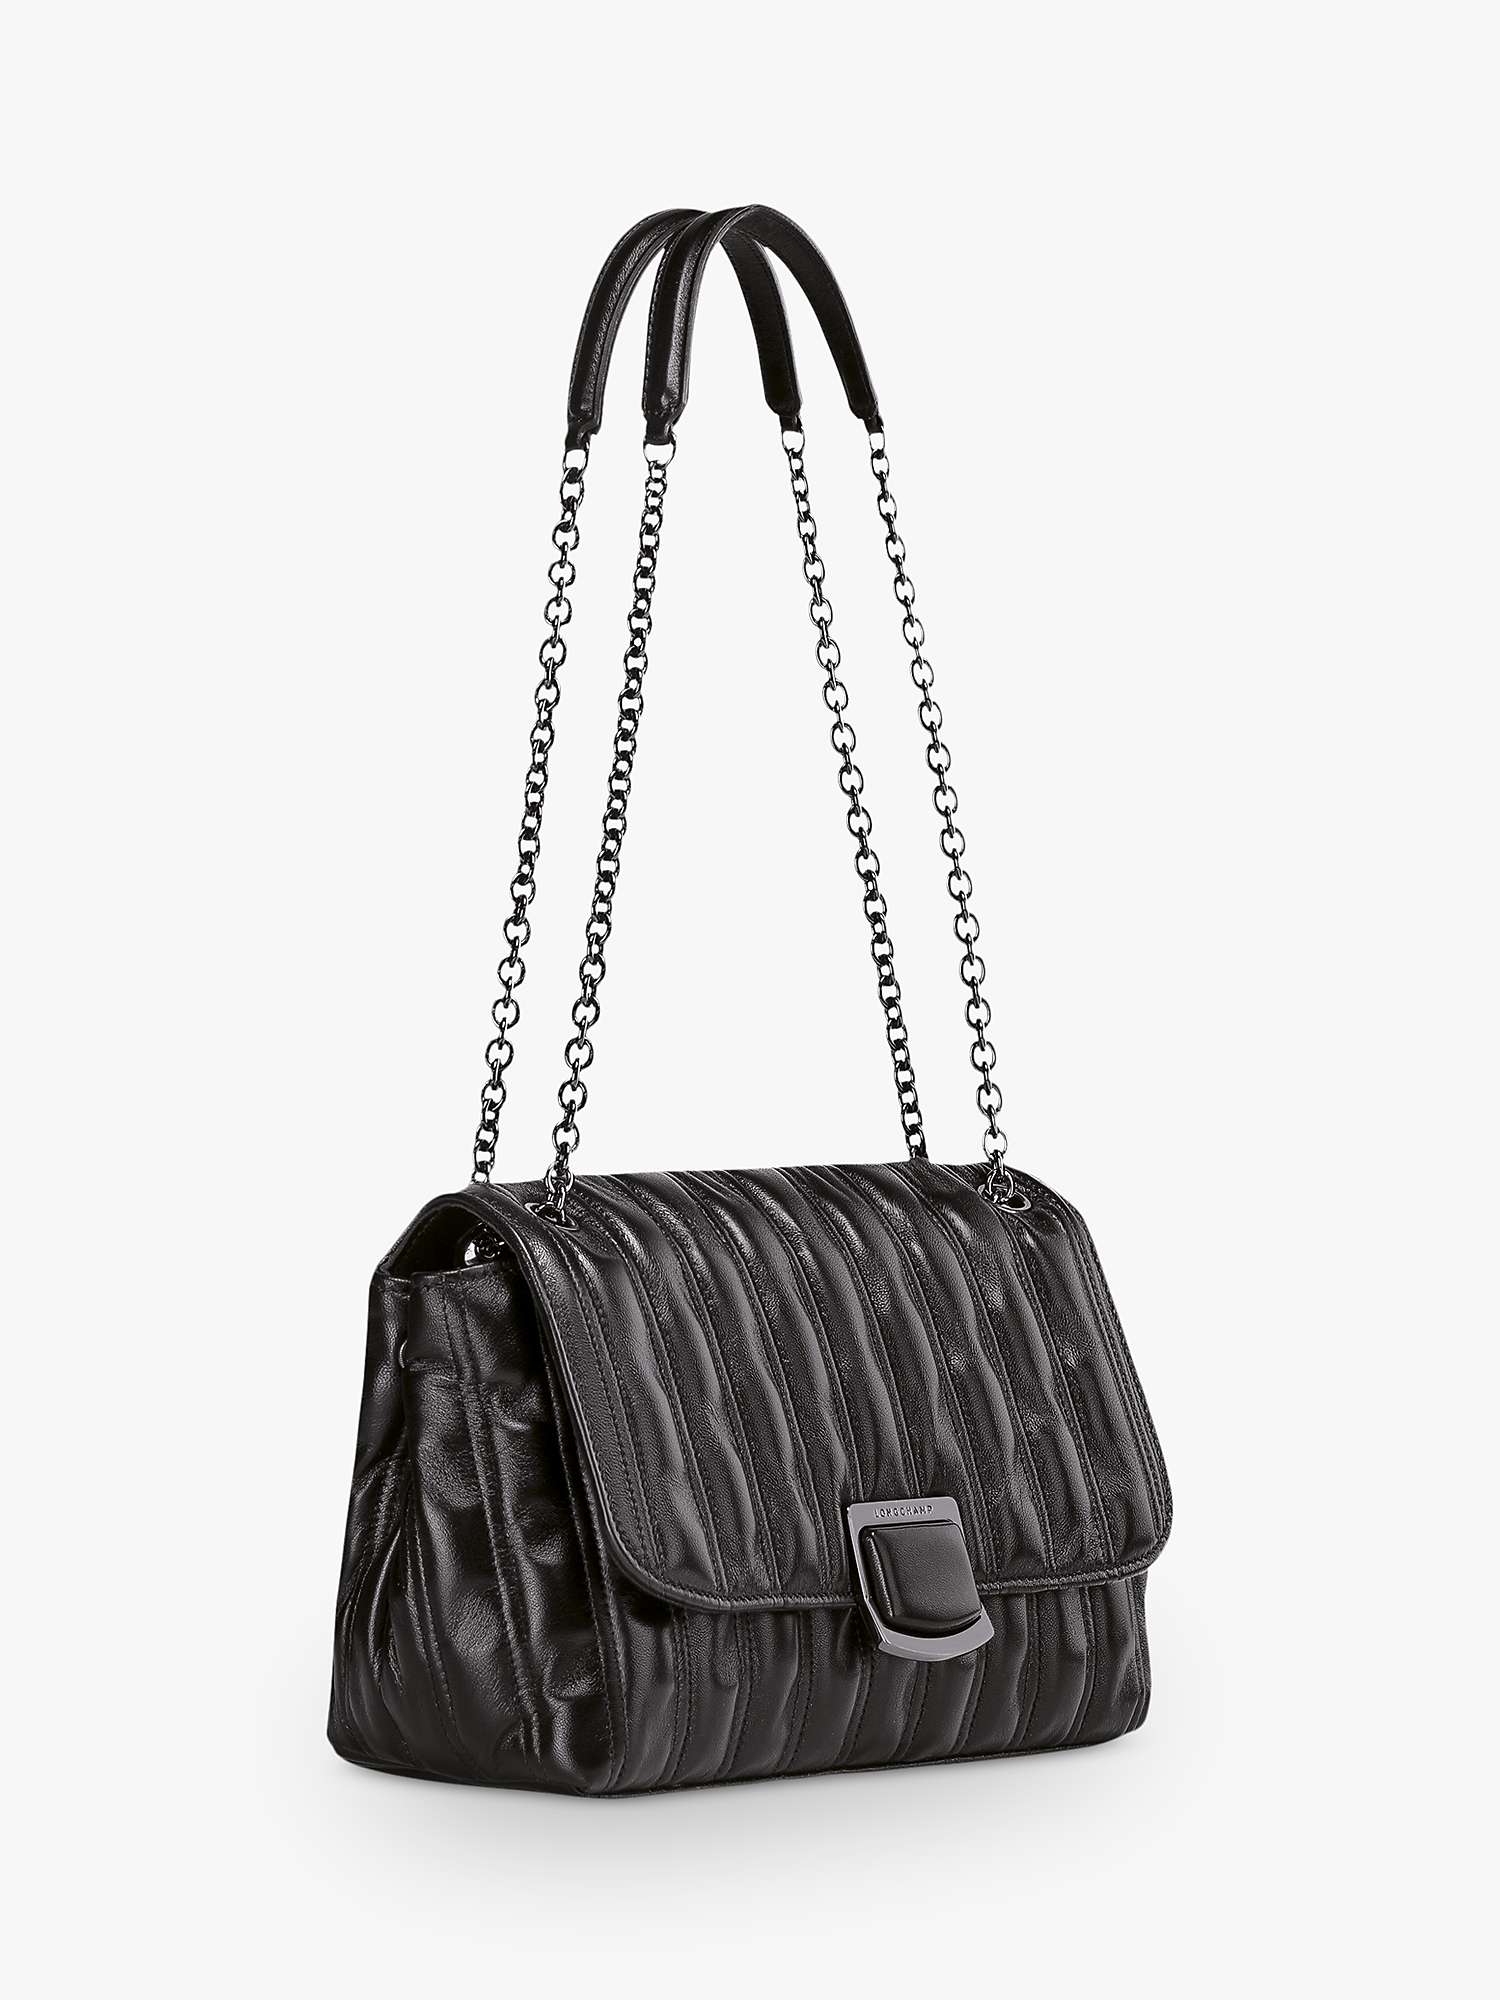 Buy Longchamp Brioche Leather Cross Body Bag Online at johnlewis.com